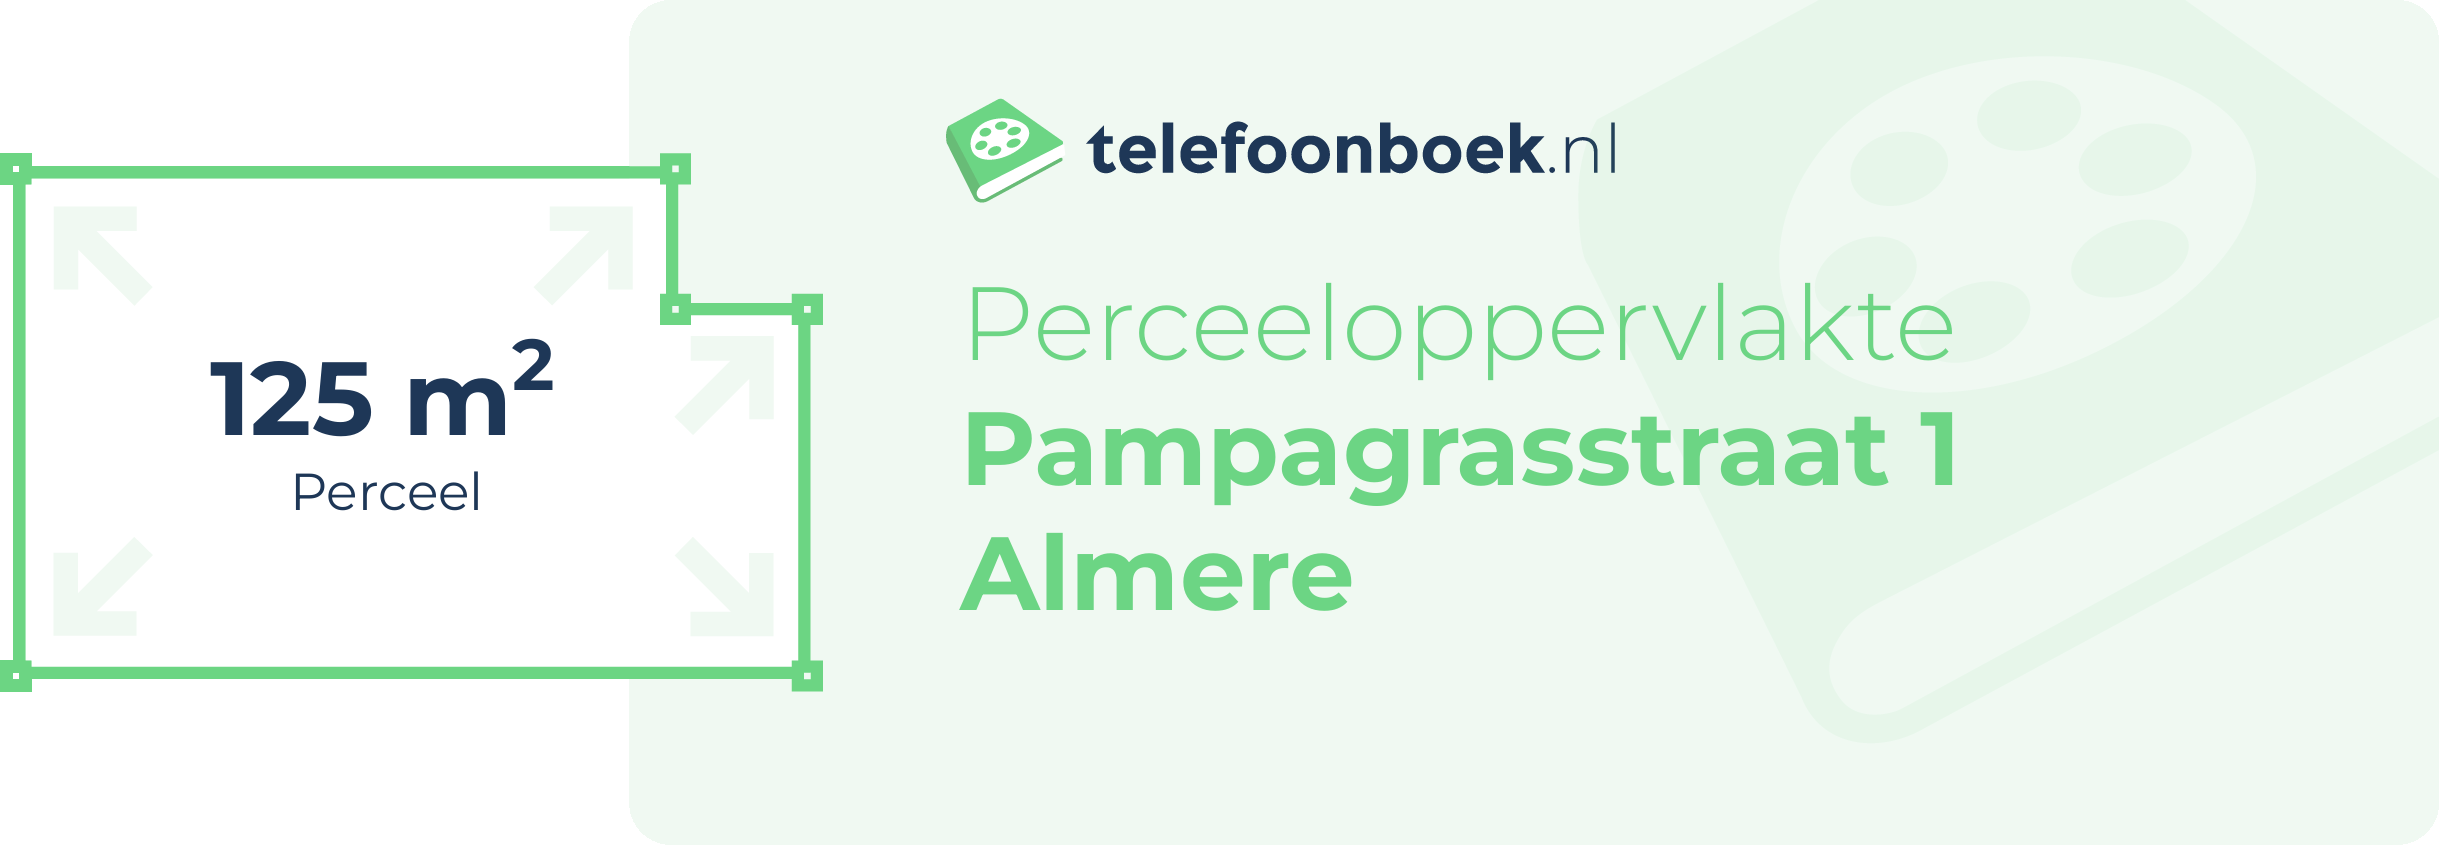 Perceeloppervlakte Pampagrasstraat 1 Almere